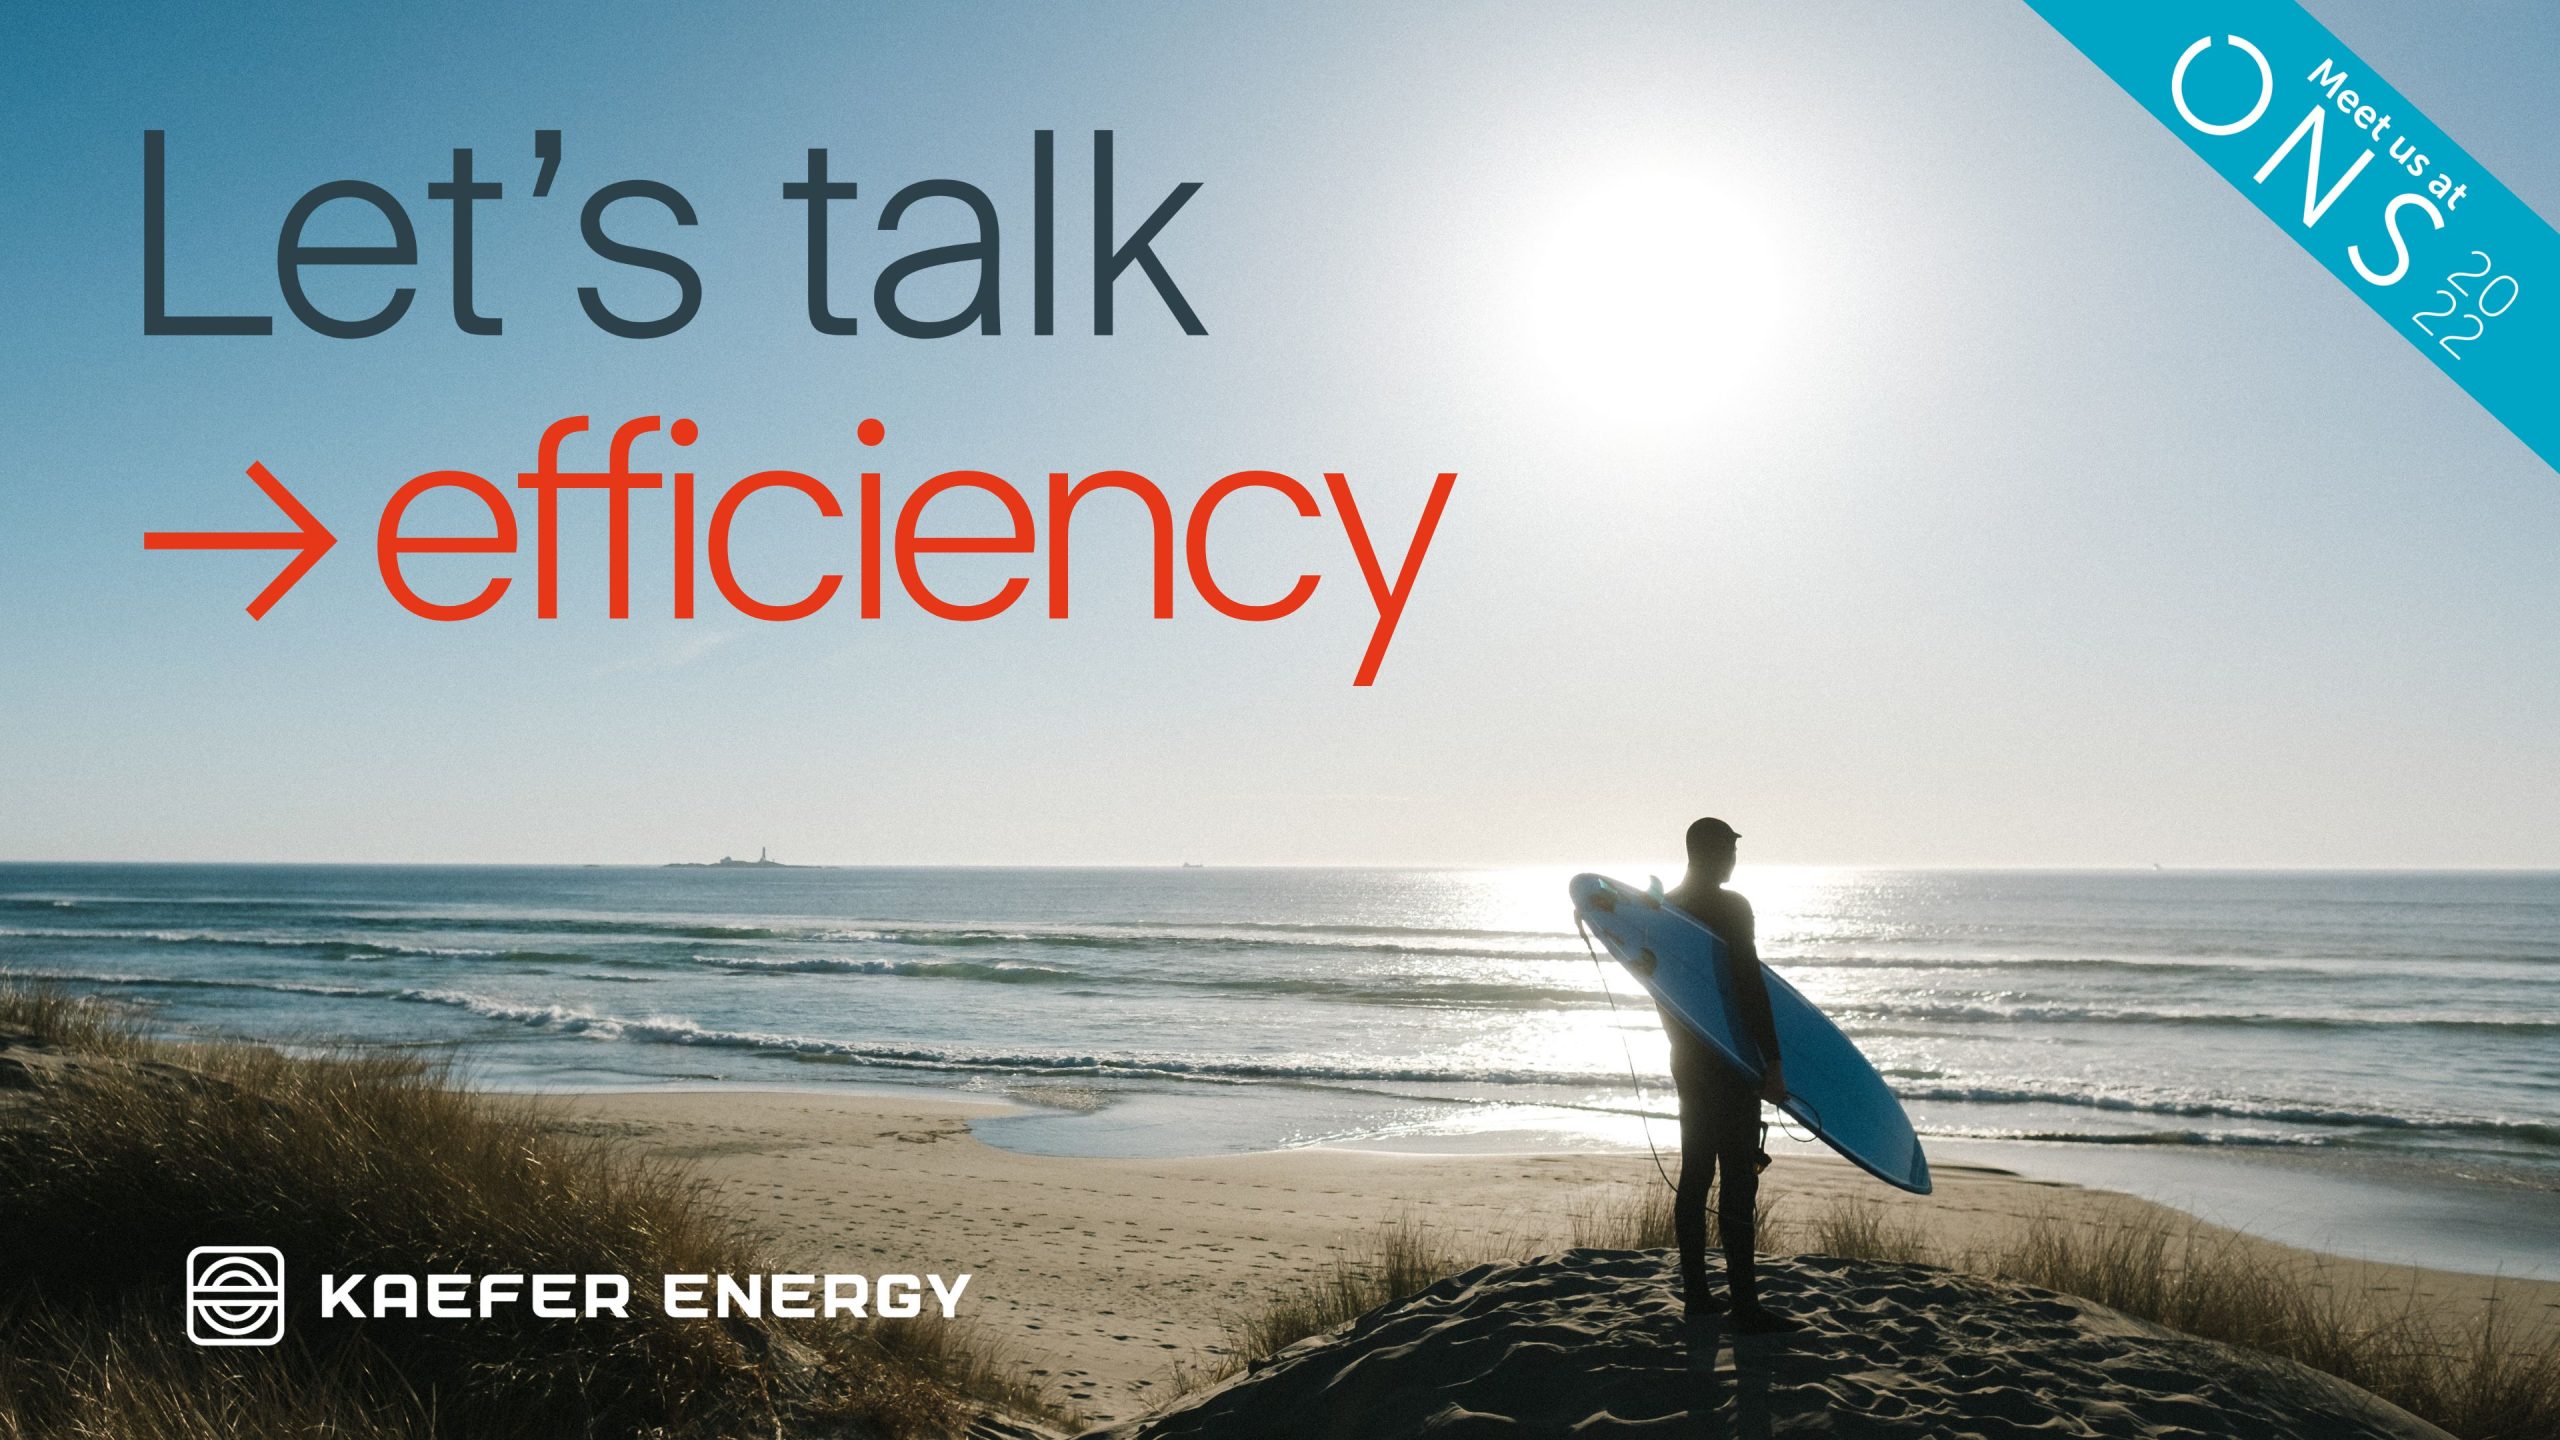 Let's talk efficiency